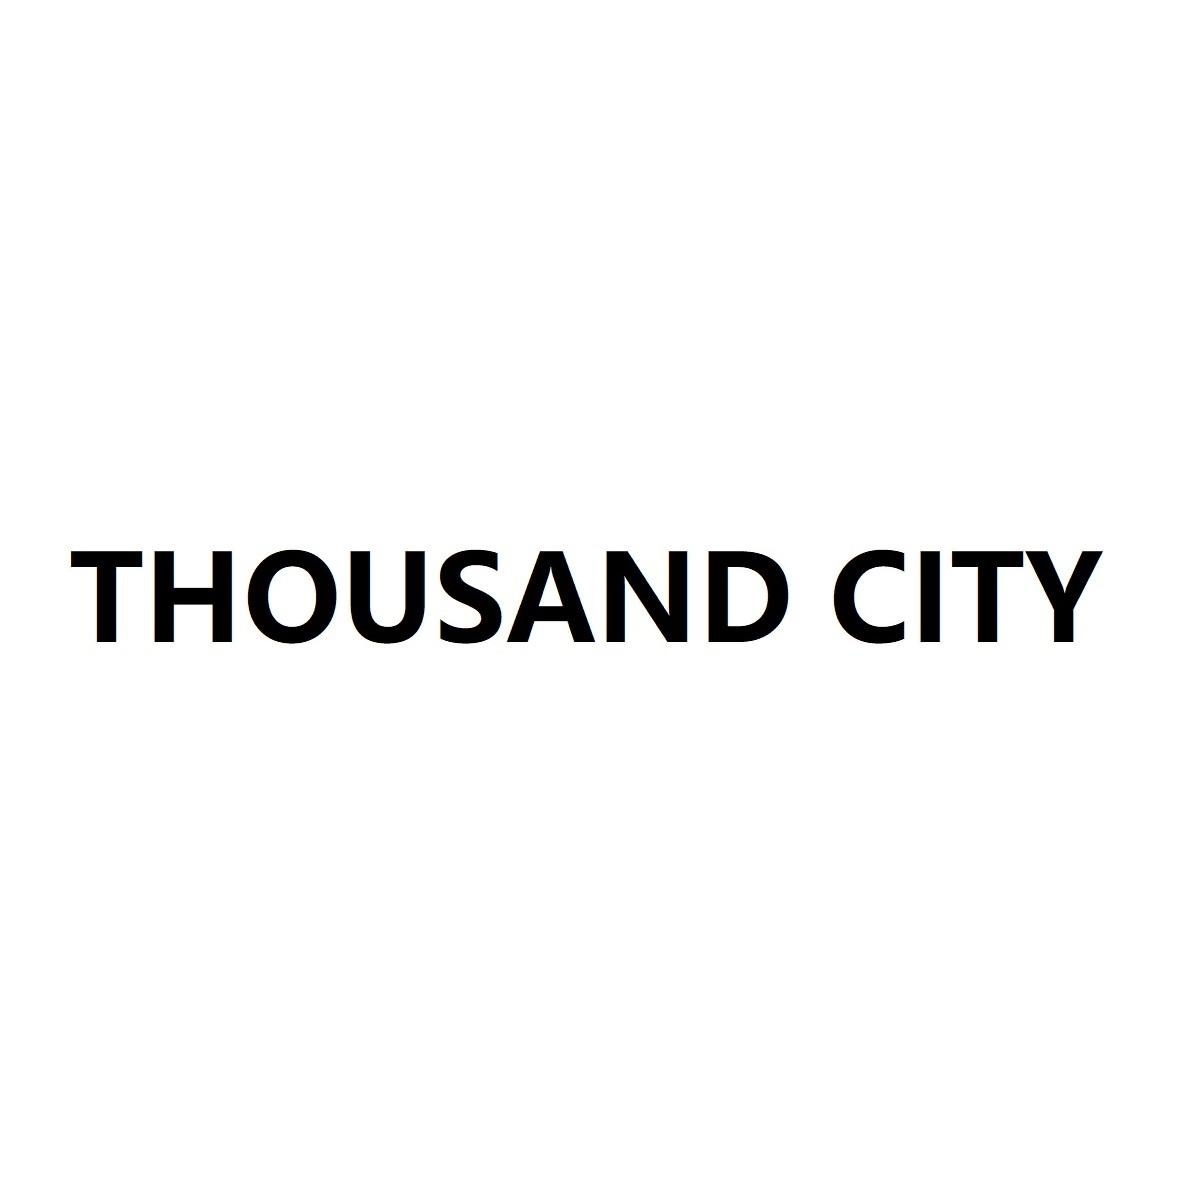 THOUSAND CITY(公司商標)